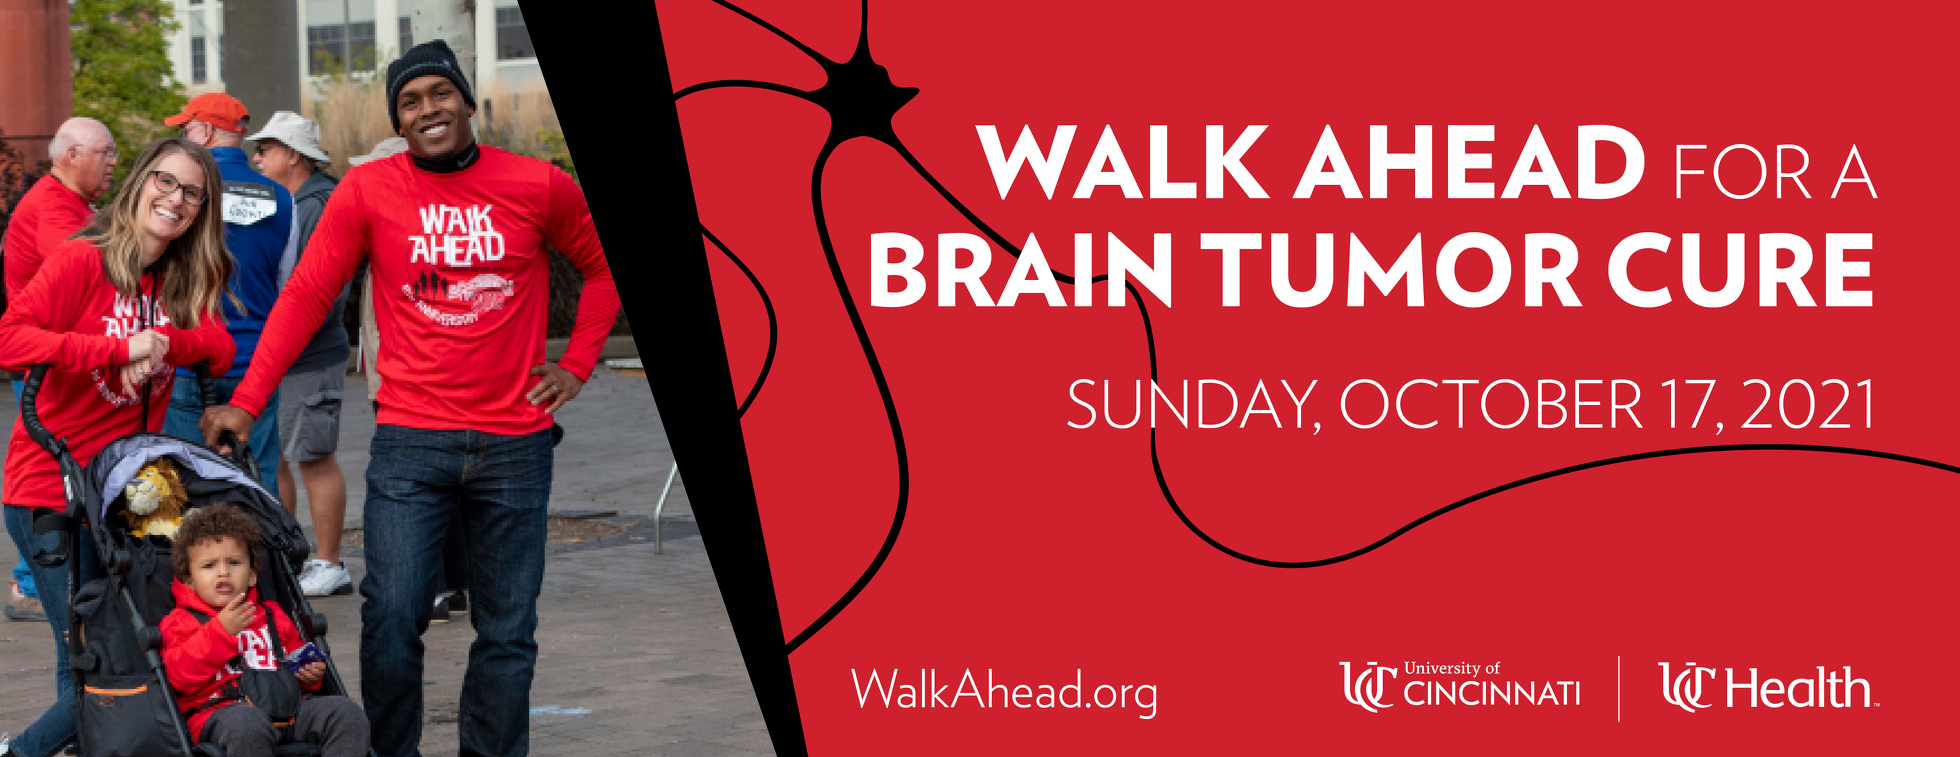 2021 Walk Ahead for a Brain Tumor Cure